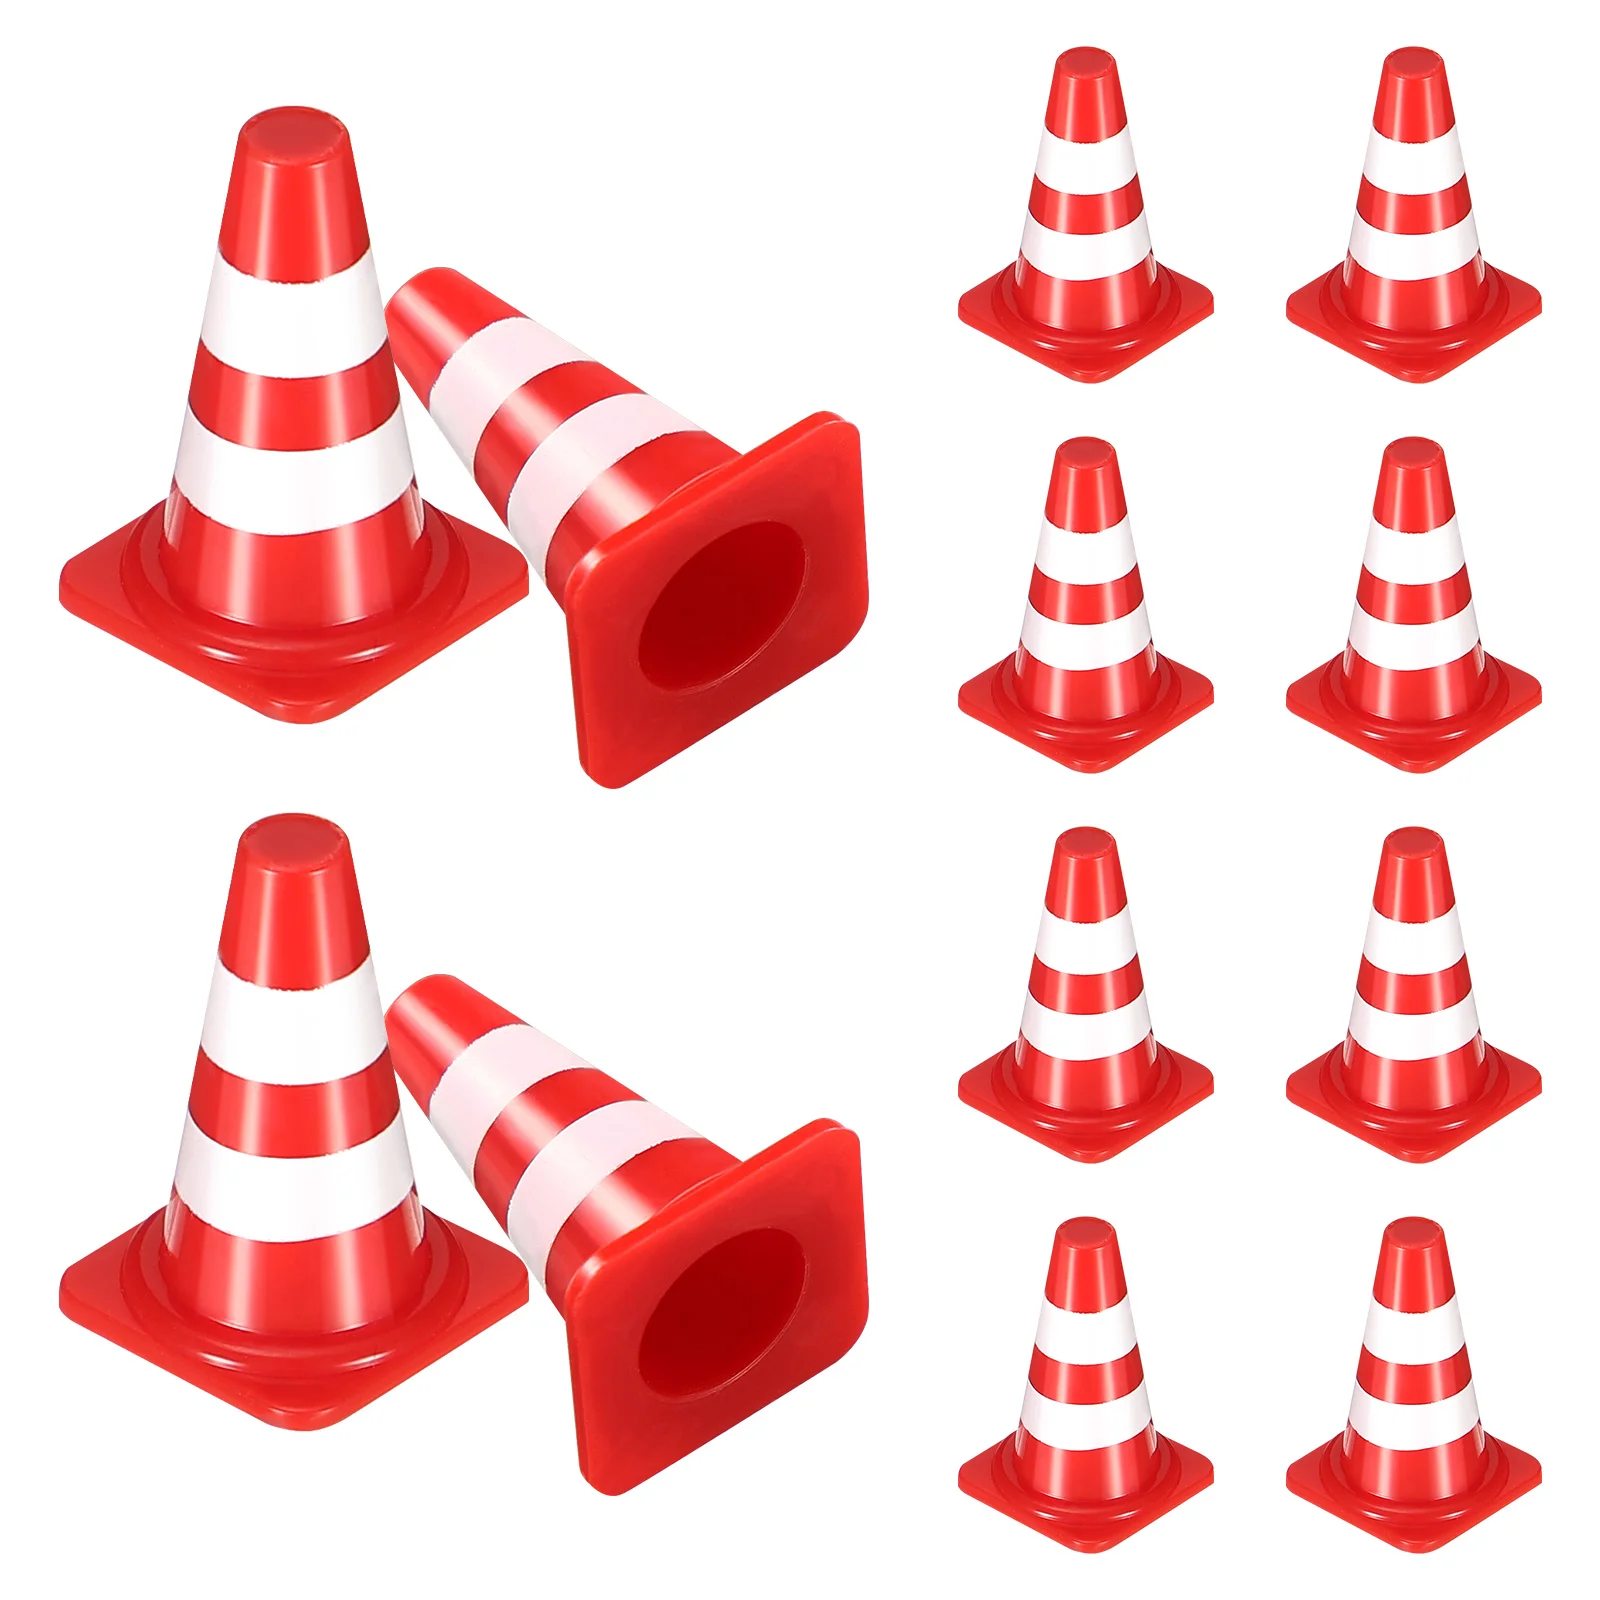 

50 Pcs Mini Construction Cones Safety Traffic Ornament Kidult Toys Parking Roadblock Kids Playsets Plastic